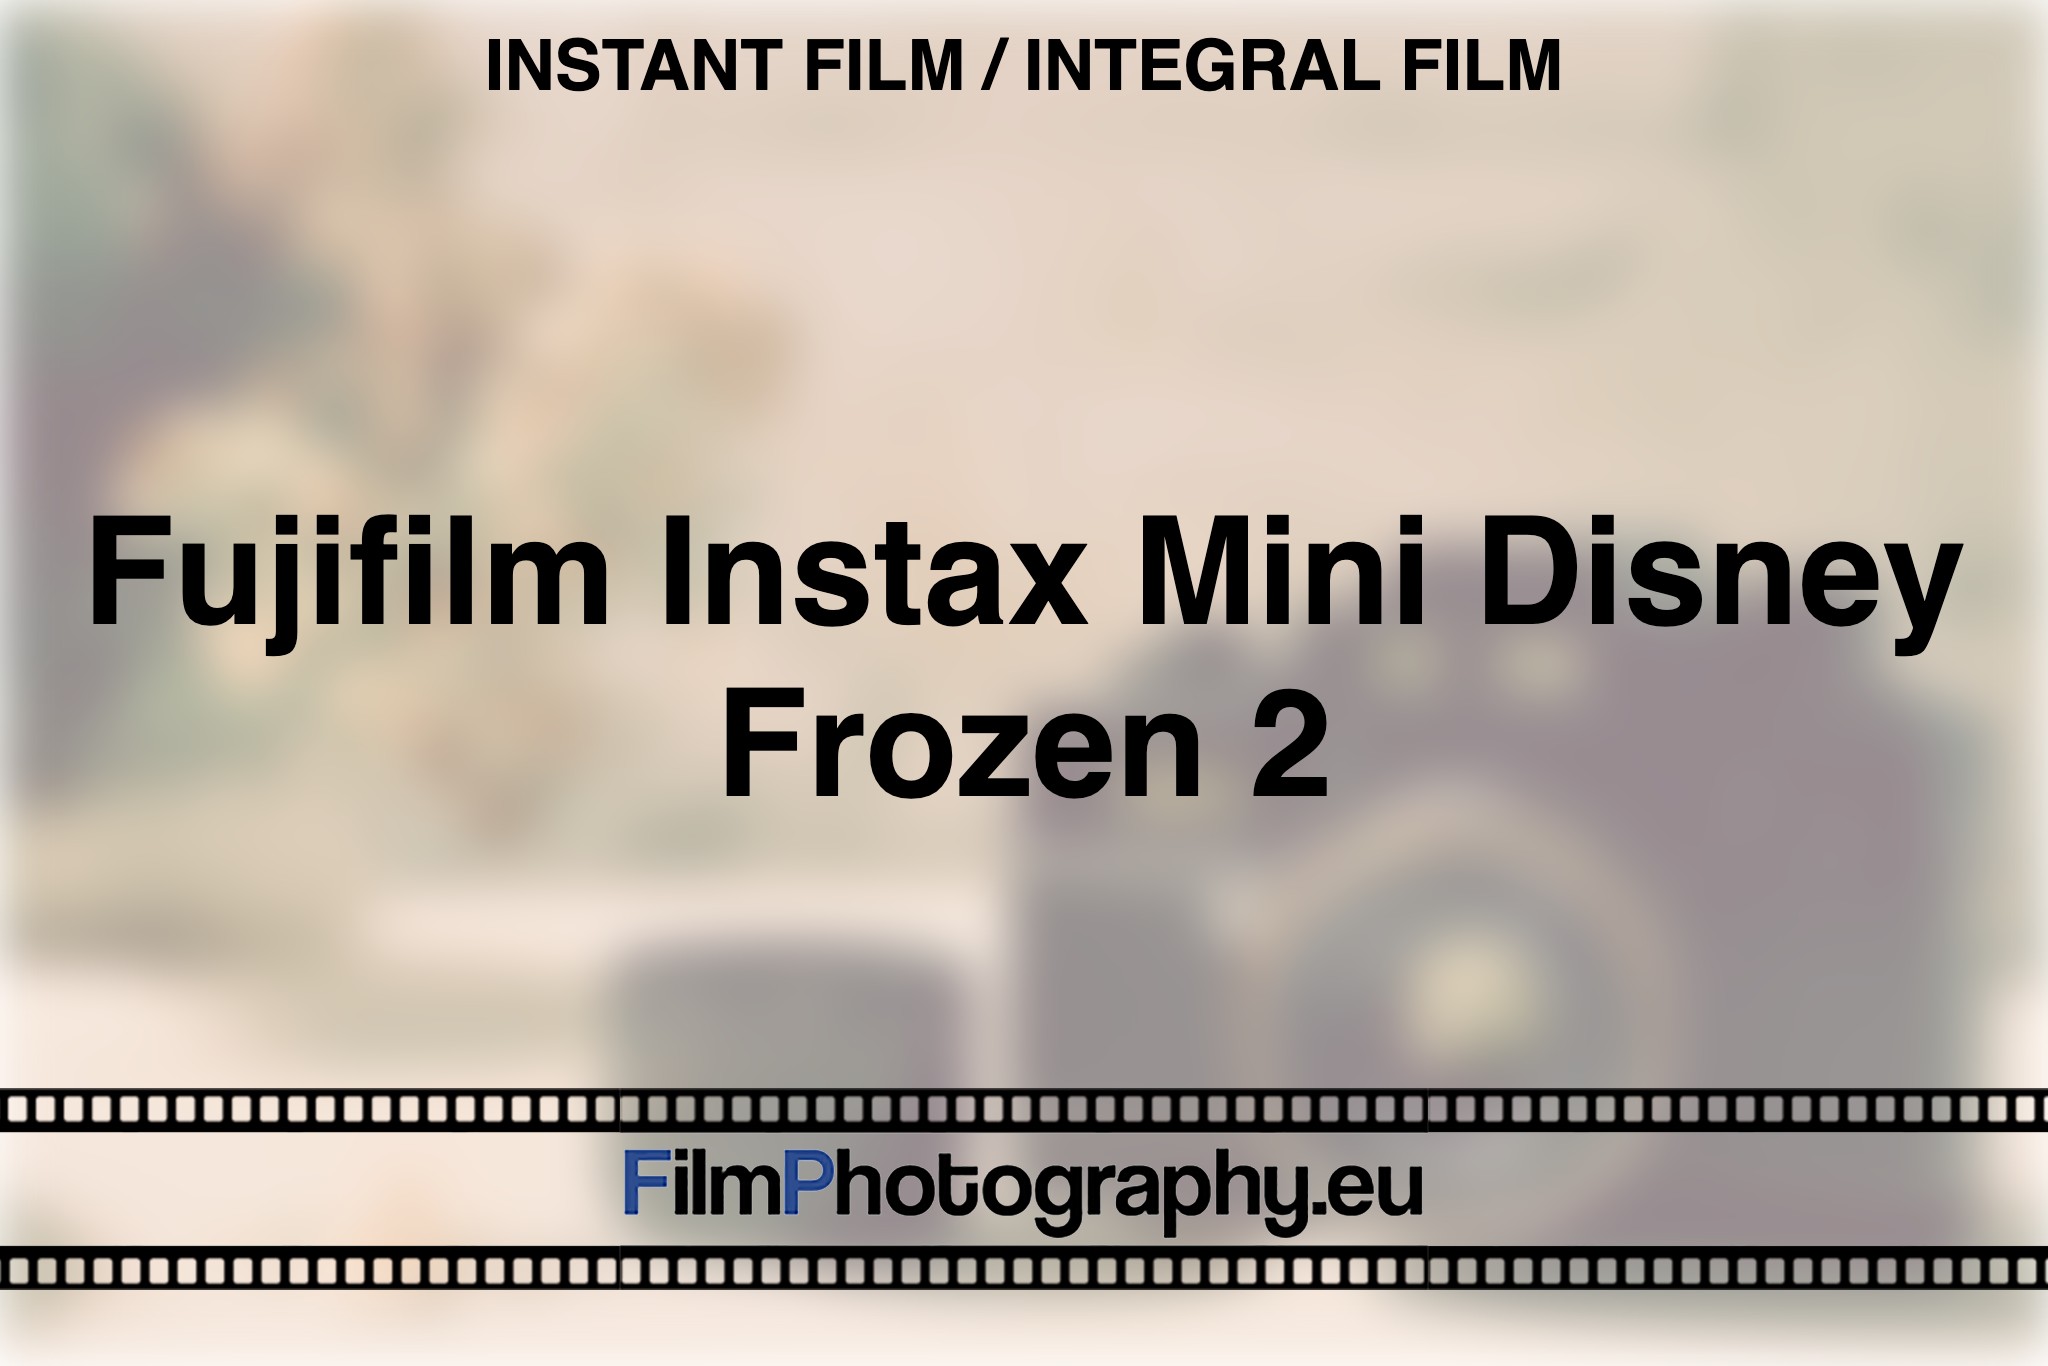 fujifilm-instax-mini-disney-frozen-2-instant-film-integral-film-bnv